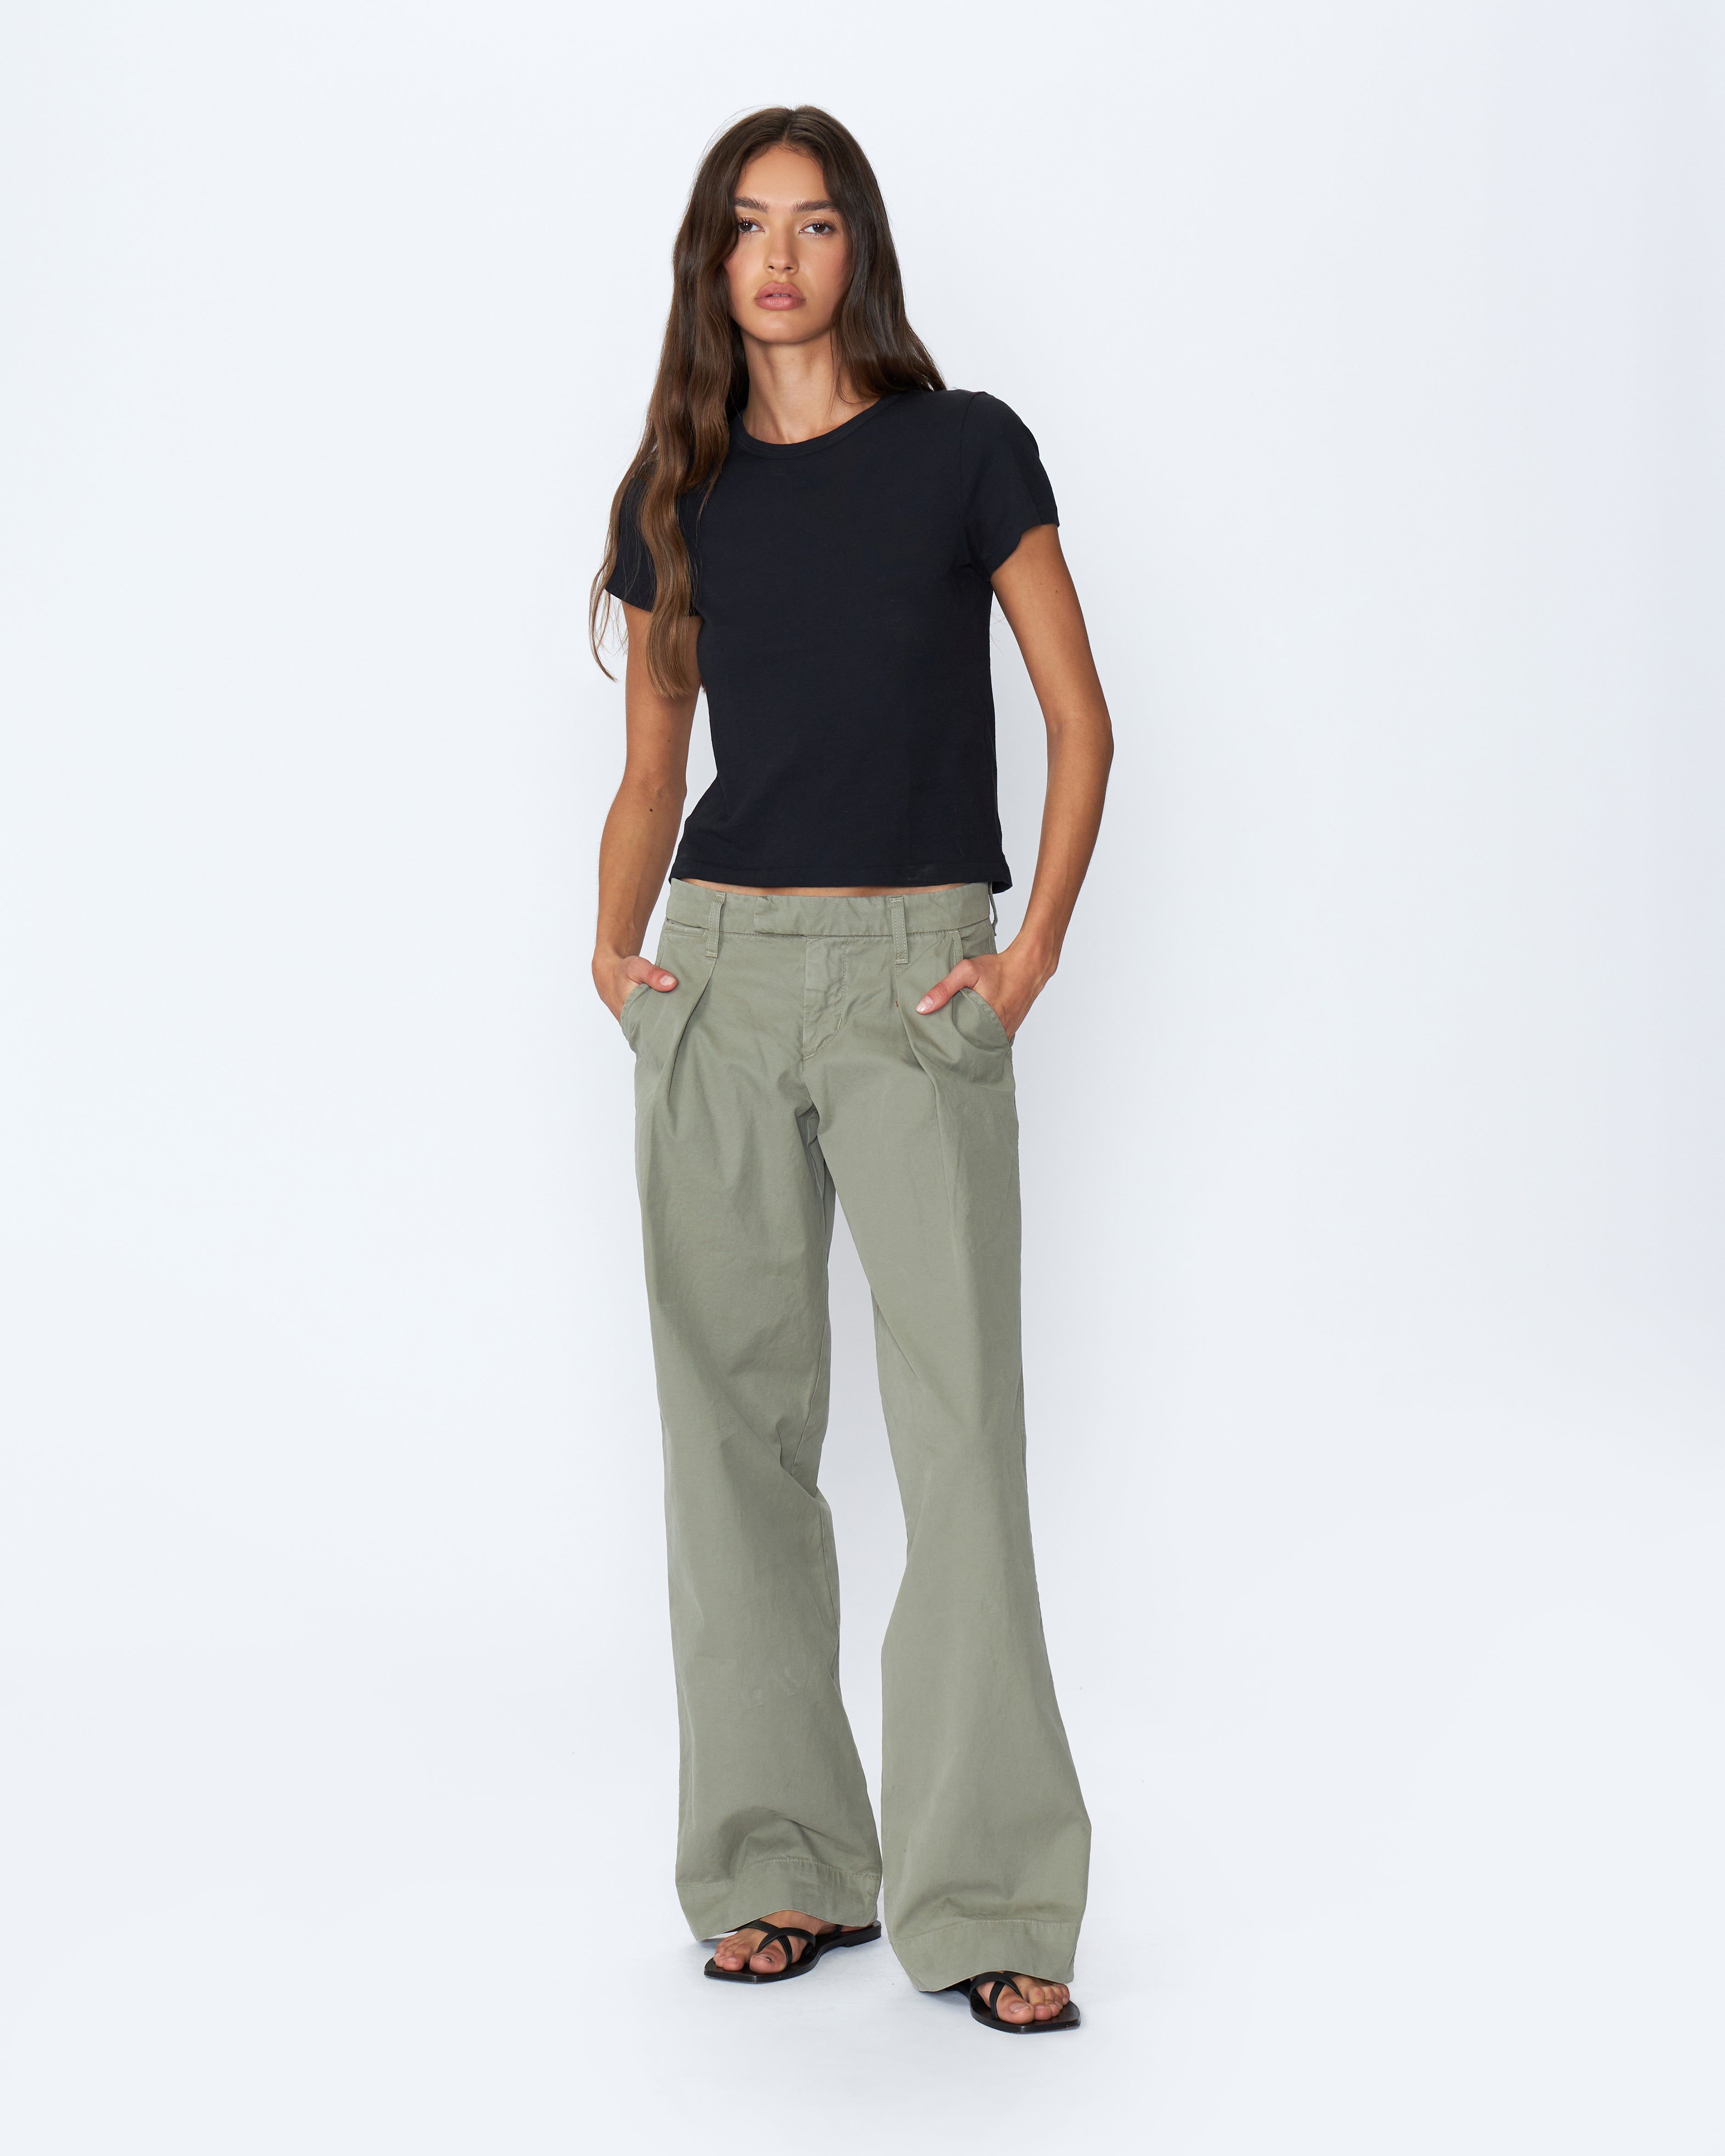 Sivali Loose Pants 332 Trousers Women [PART 1] Anti-Wrinkle Pants